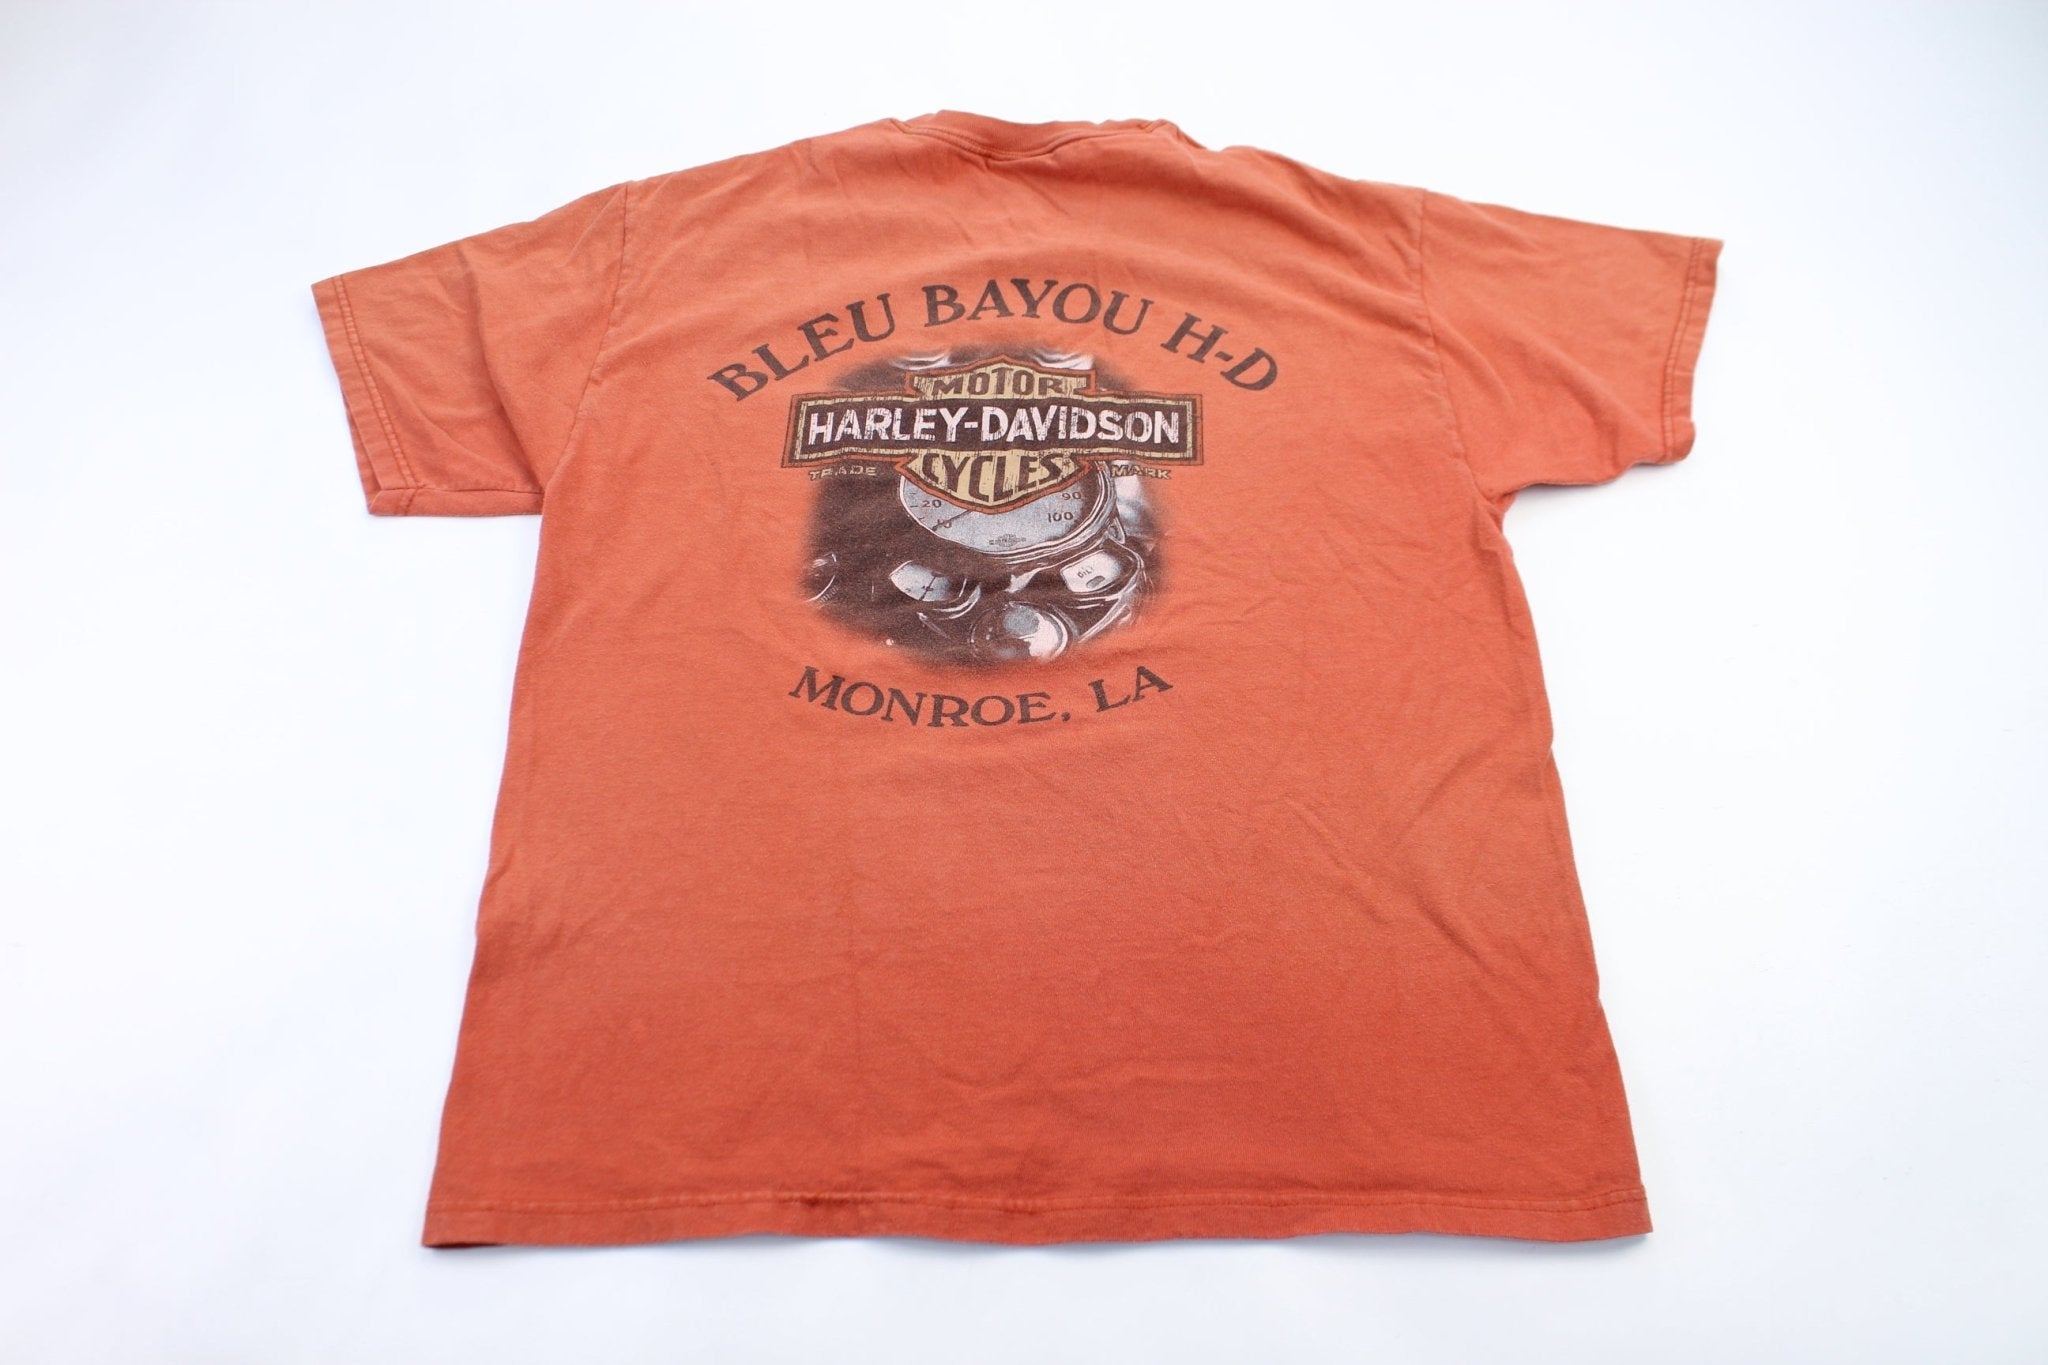 Haley Davidson Motorcycles Monroe, Louisiana T-Shirt - ThriftedThreads.com